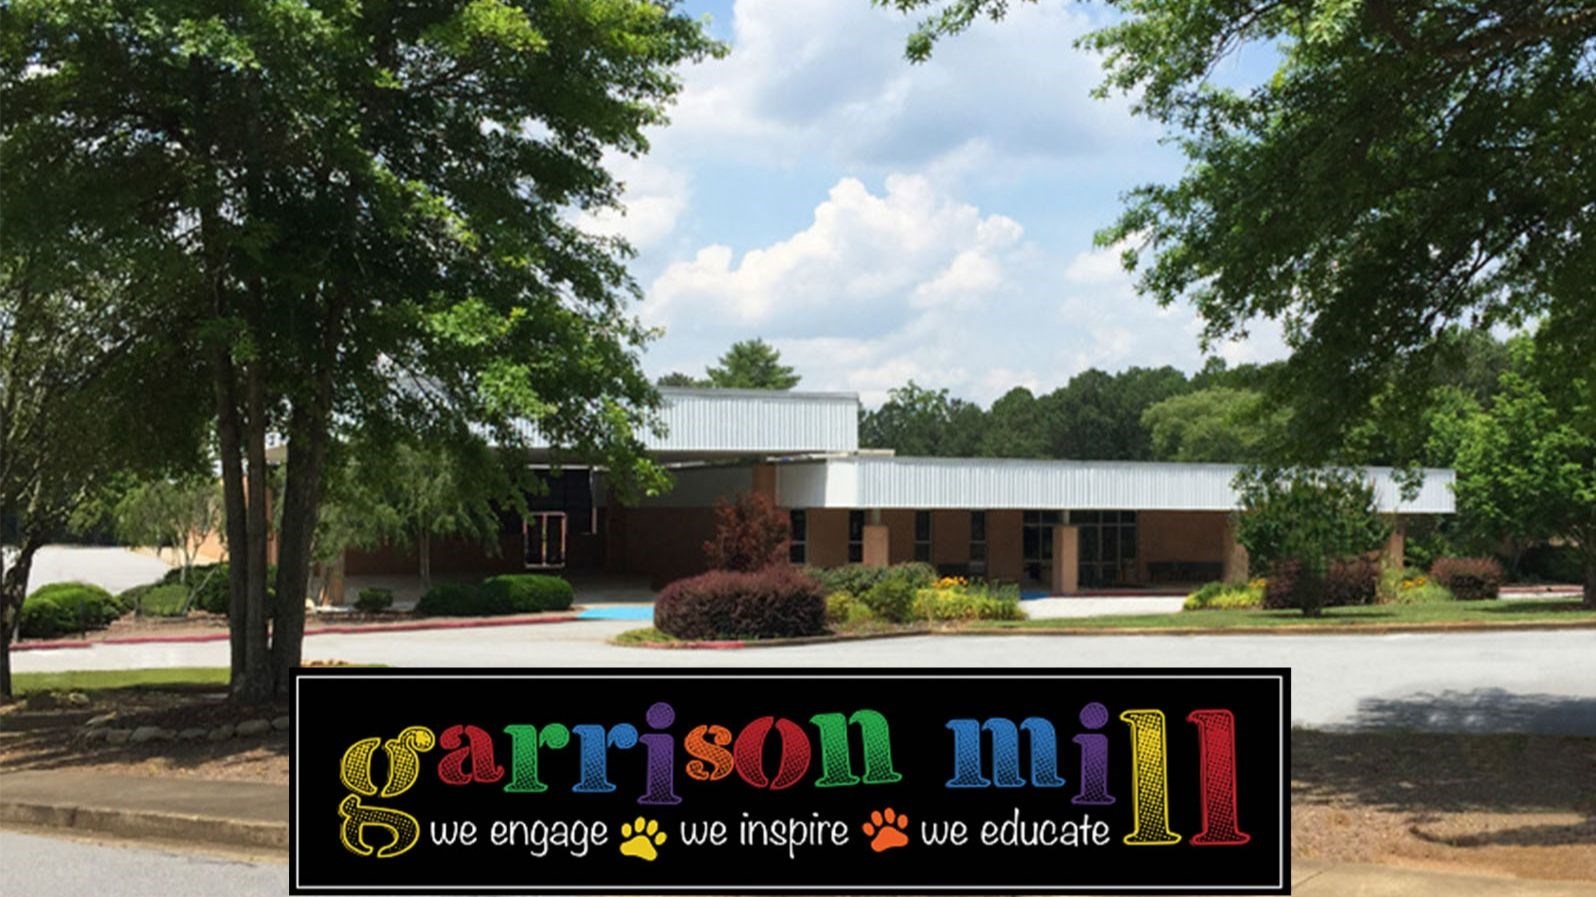 Garrison Mill Elementary